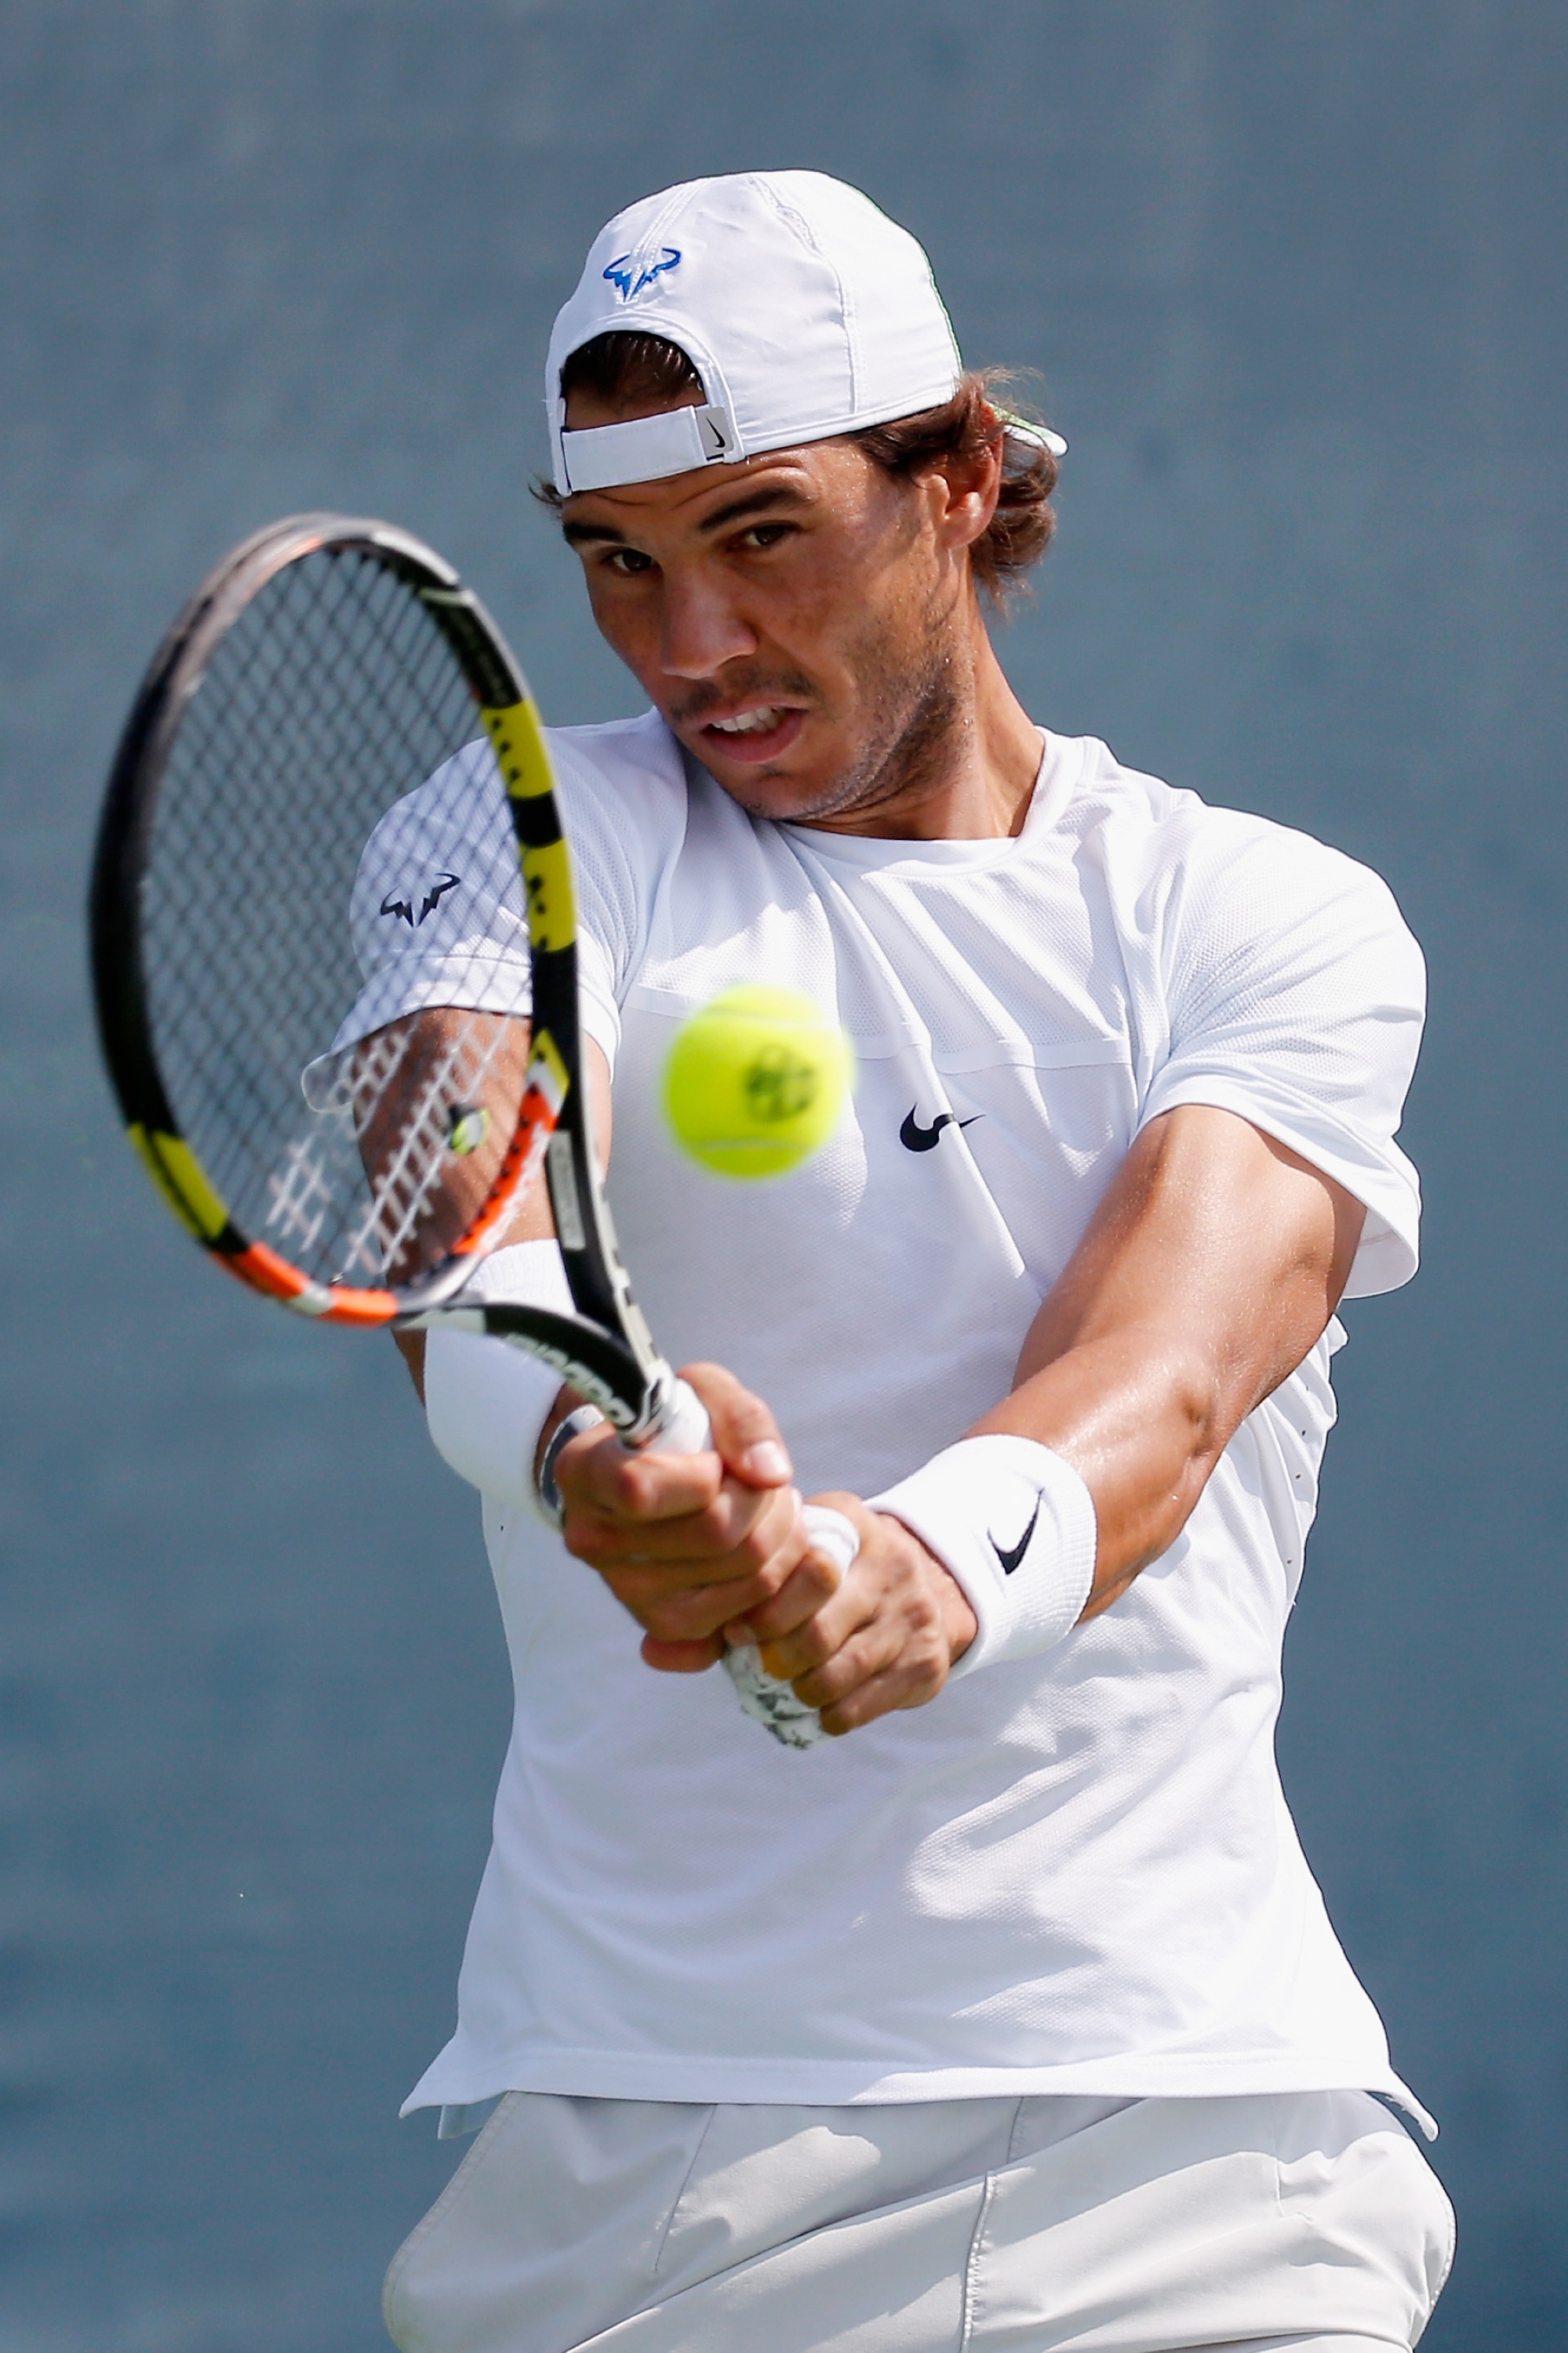 Photos: Rafael Nadal practicing in Cincinnati (Monday, August 17) – Rafael Nadal Fans